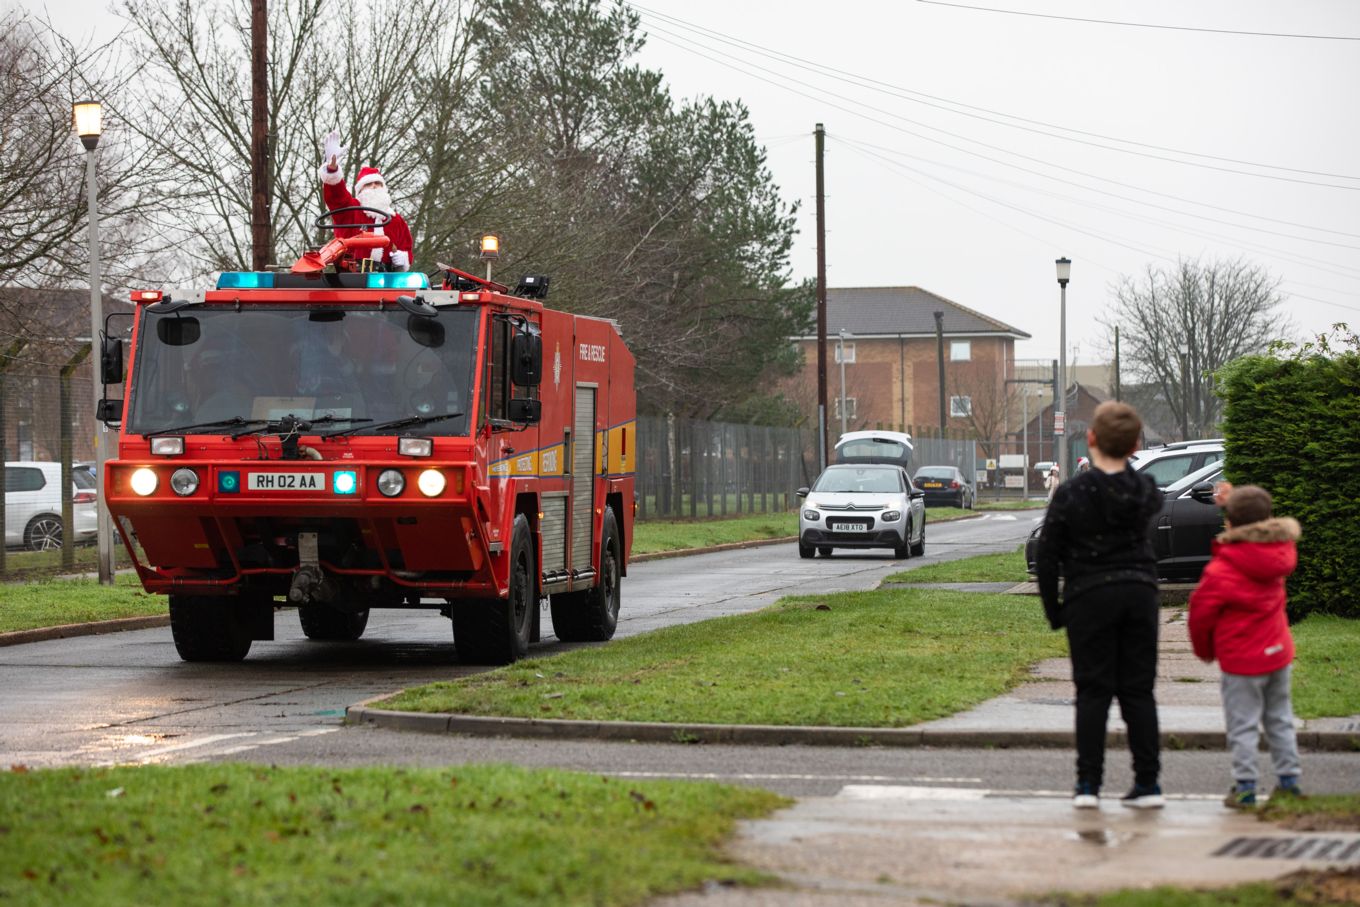 Santa on a fire engine delivering presents